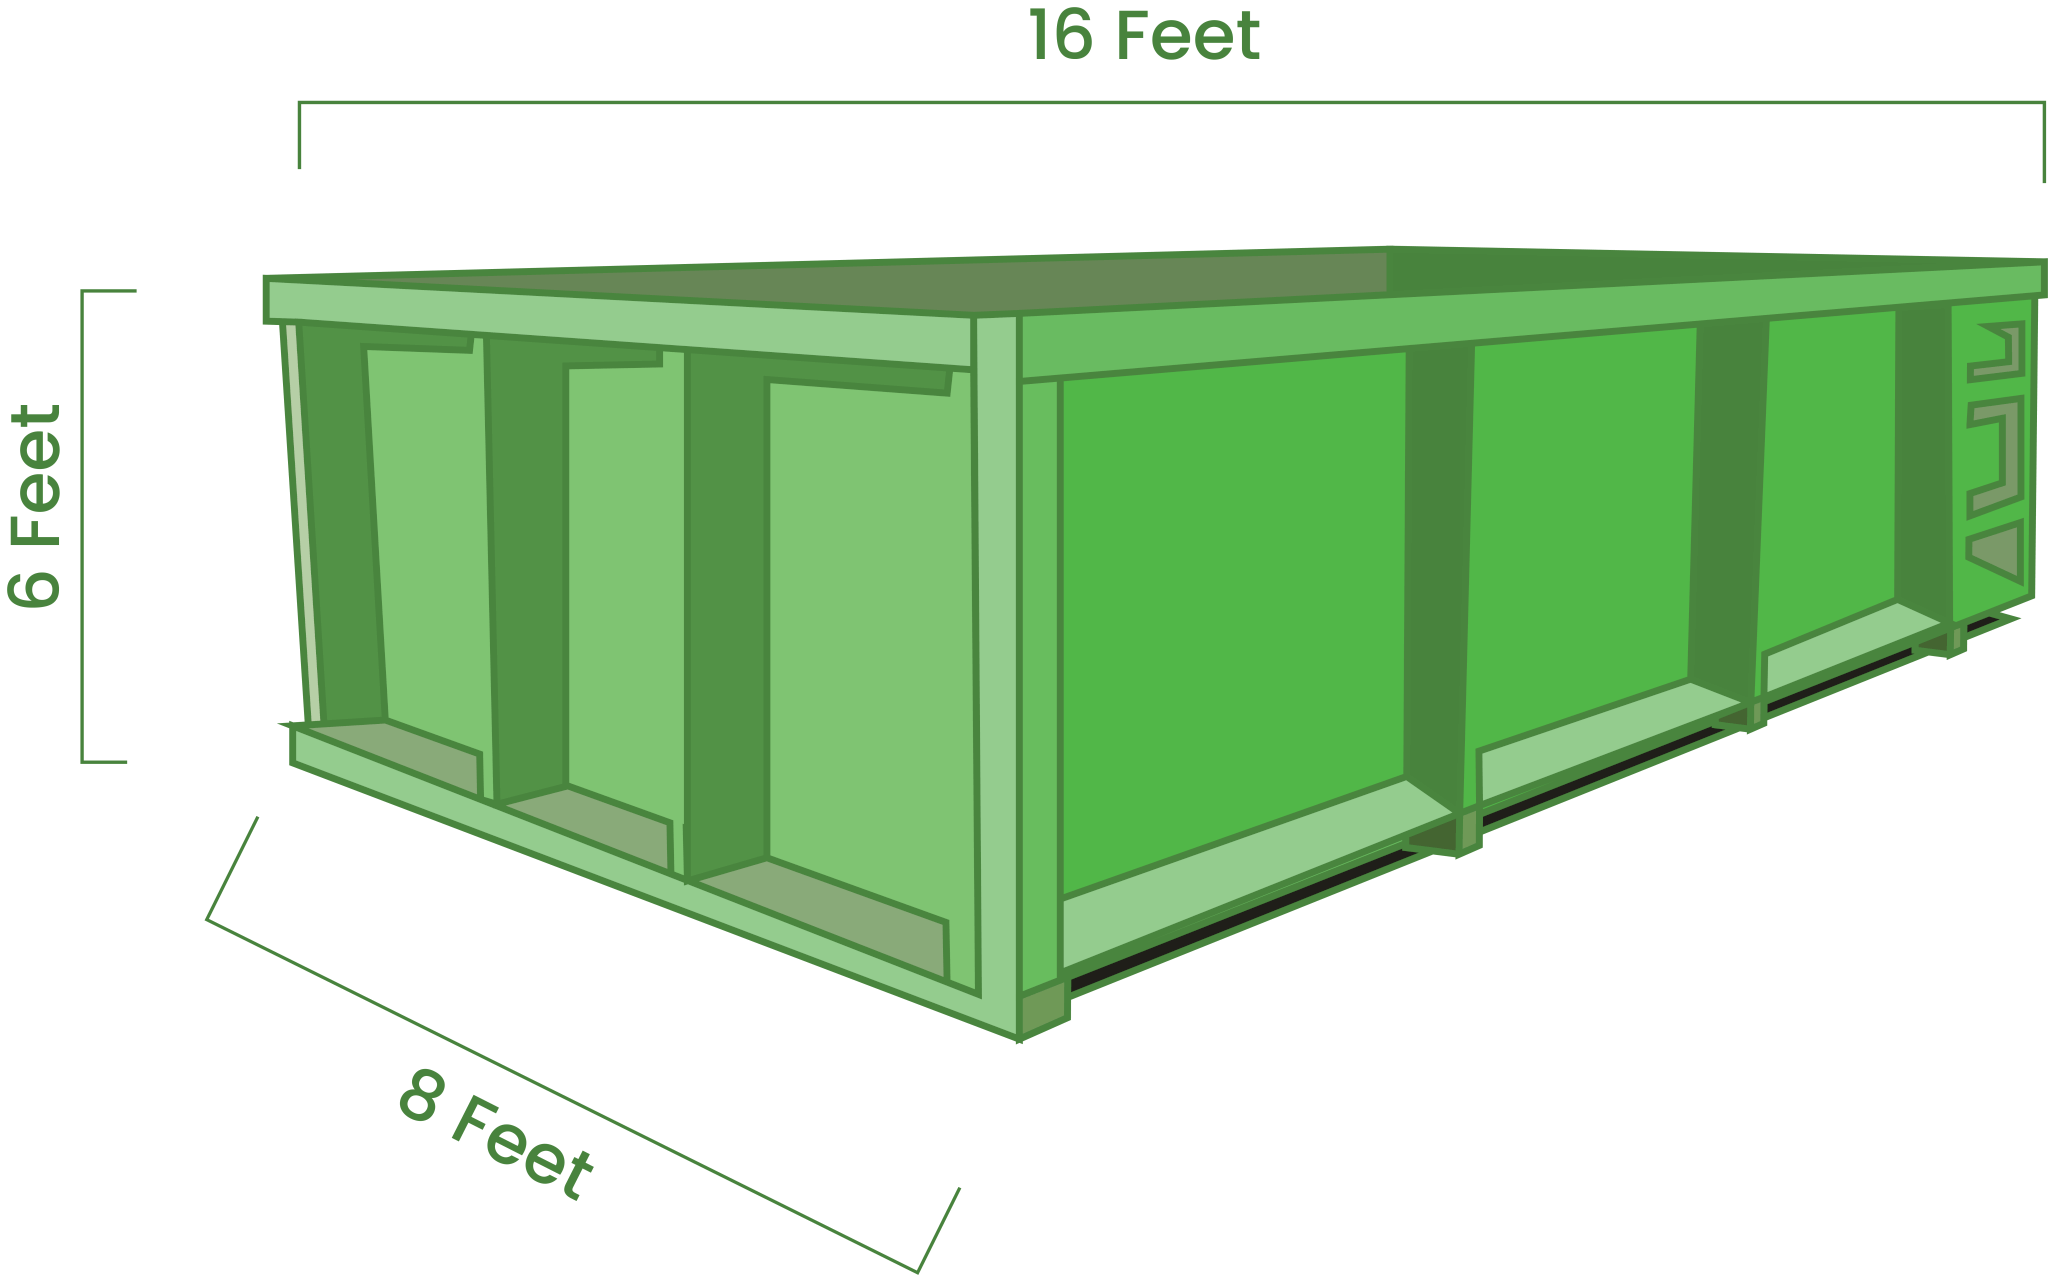 green dumpster truck graphic